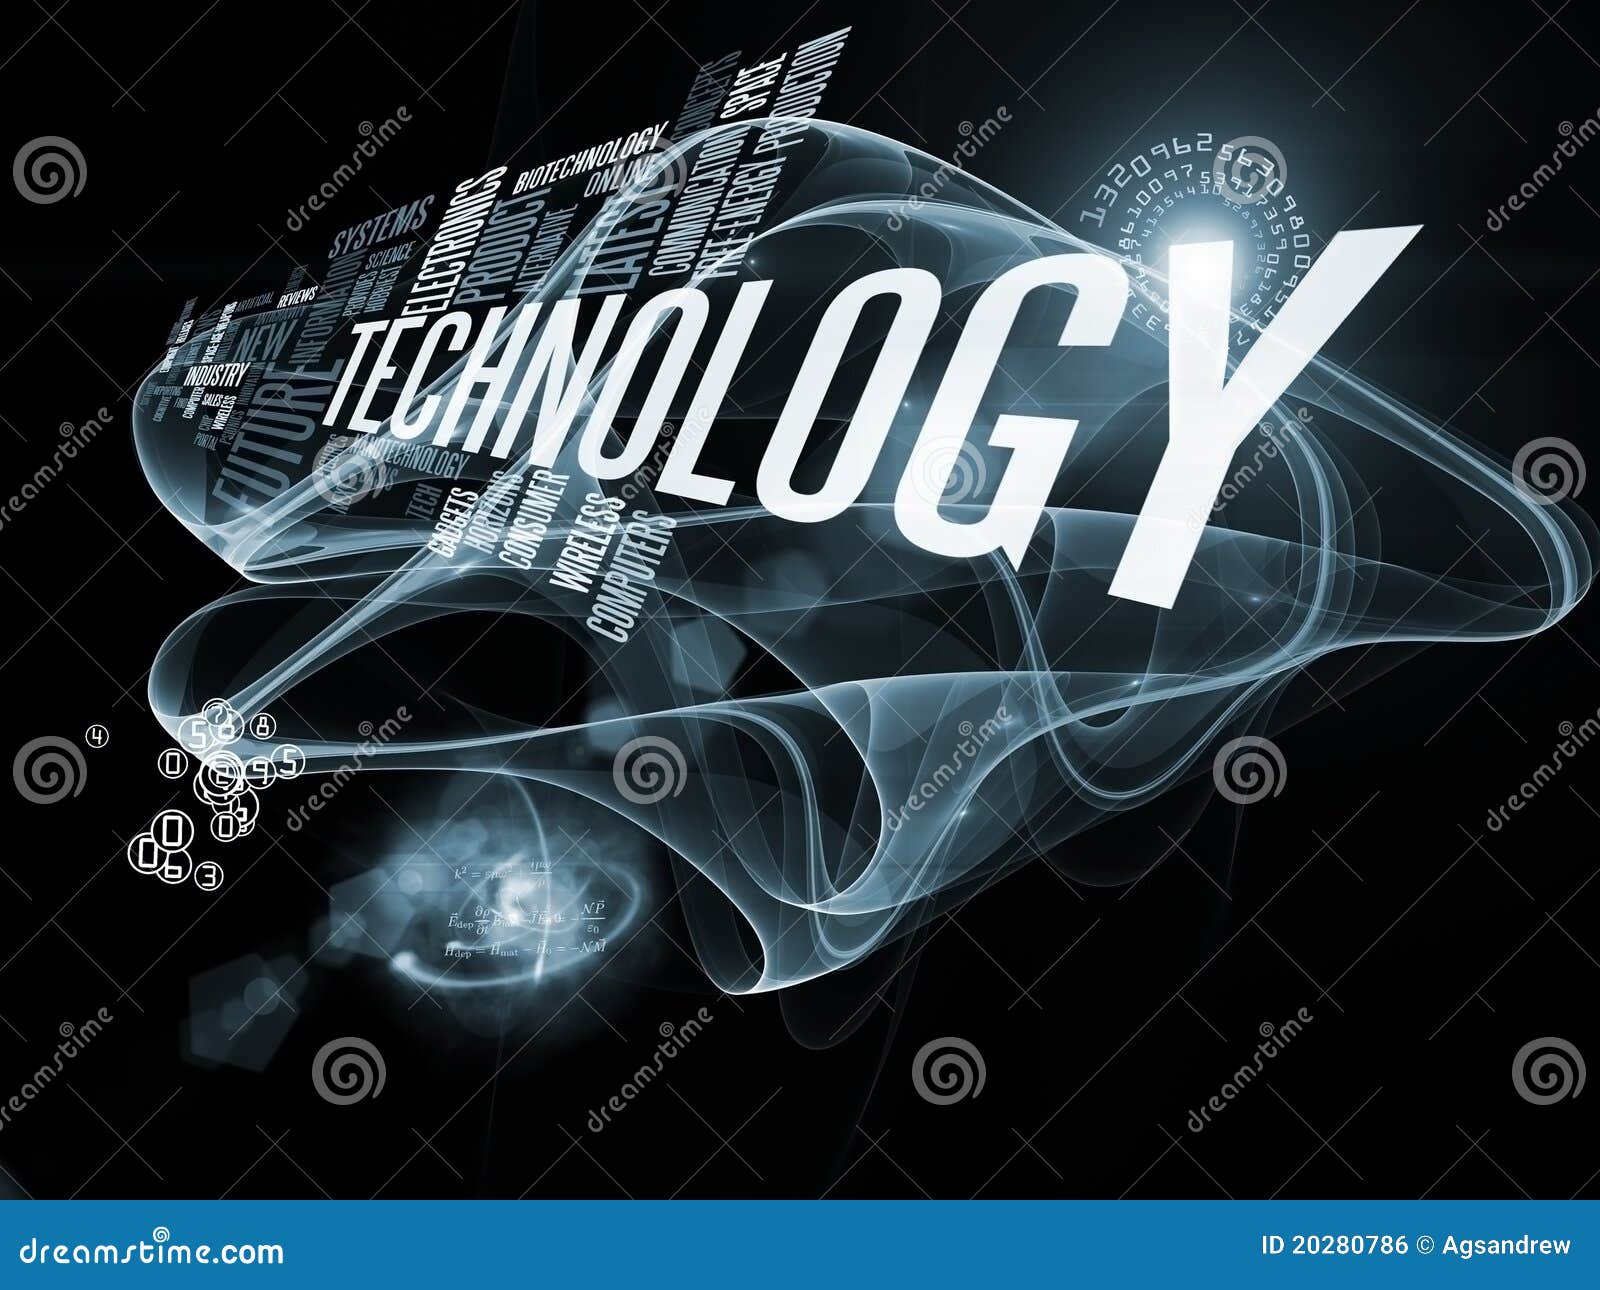 Progress Of Technology Royalty Free Stock Image - Image: 20280786